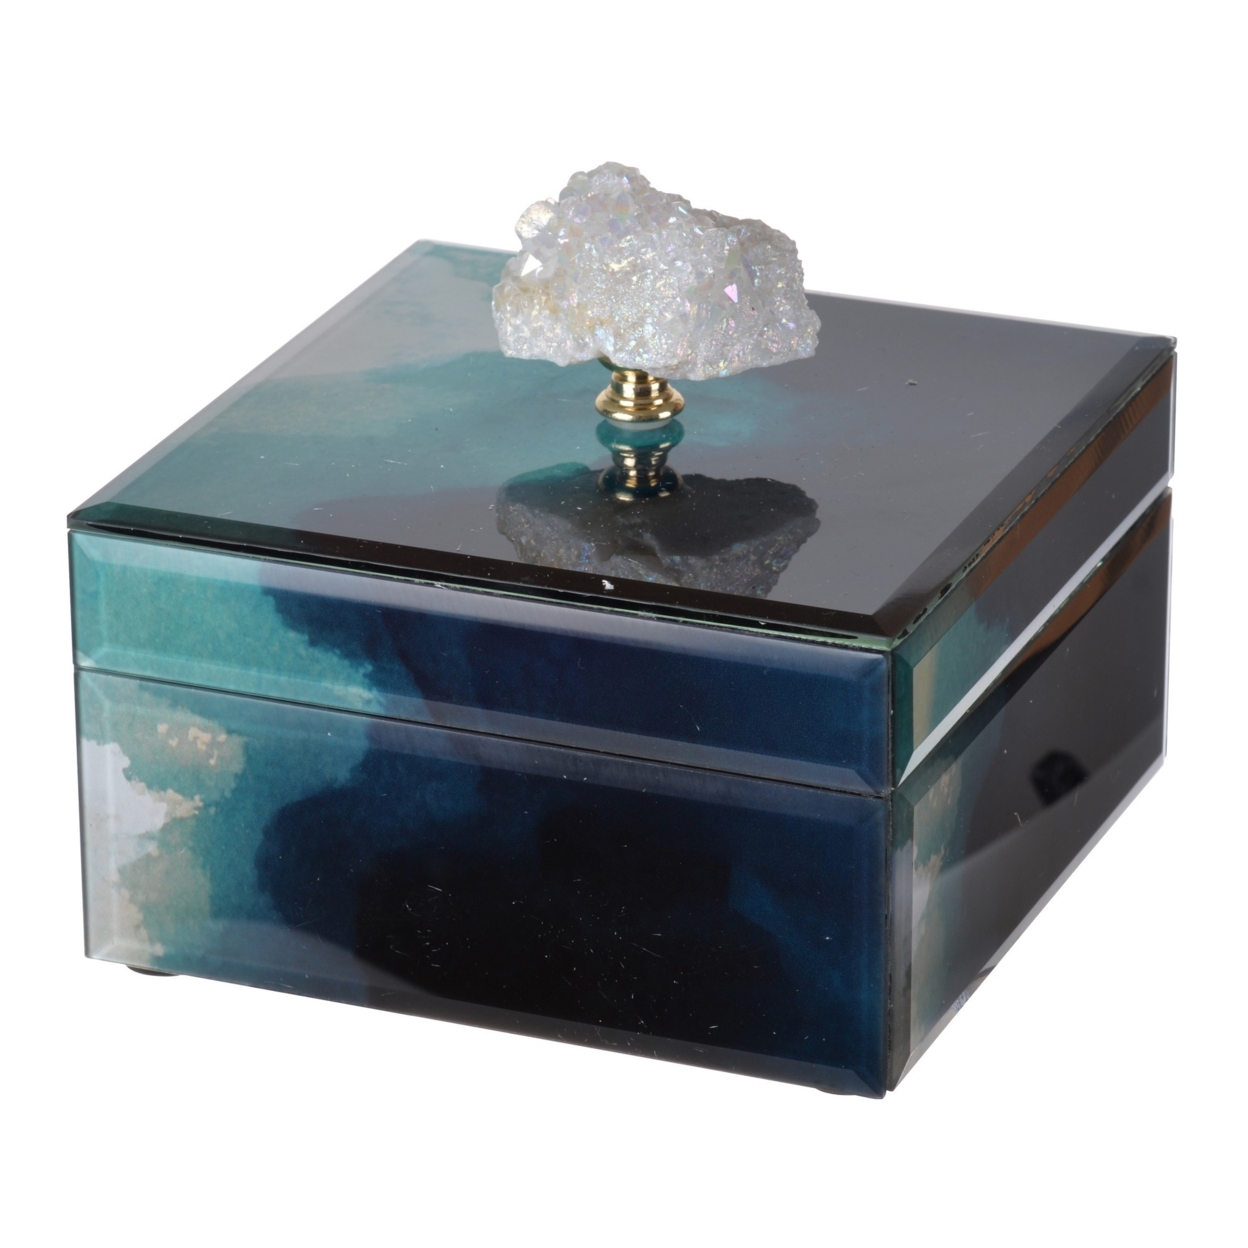 Eve 6 Inch Decorative Accessory Box, Elegant Stone With Finial Accent, Blue- Saltoro Sherpi